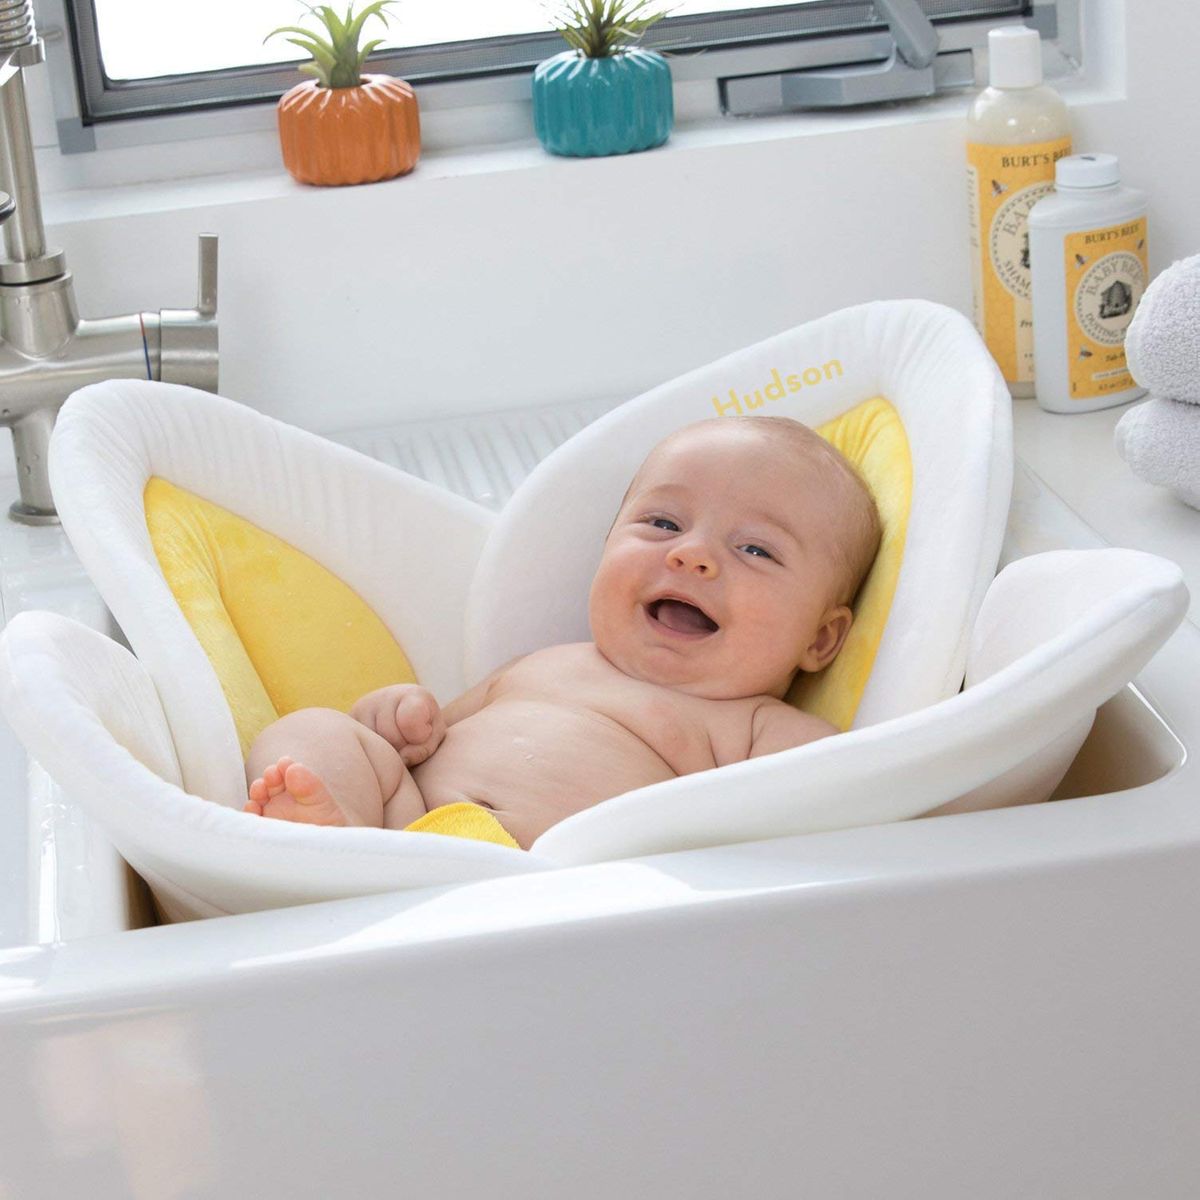 11 Best Baby Bathtubs 2019 The Strategist, Best Infant To Toddler Bathtub